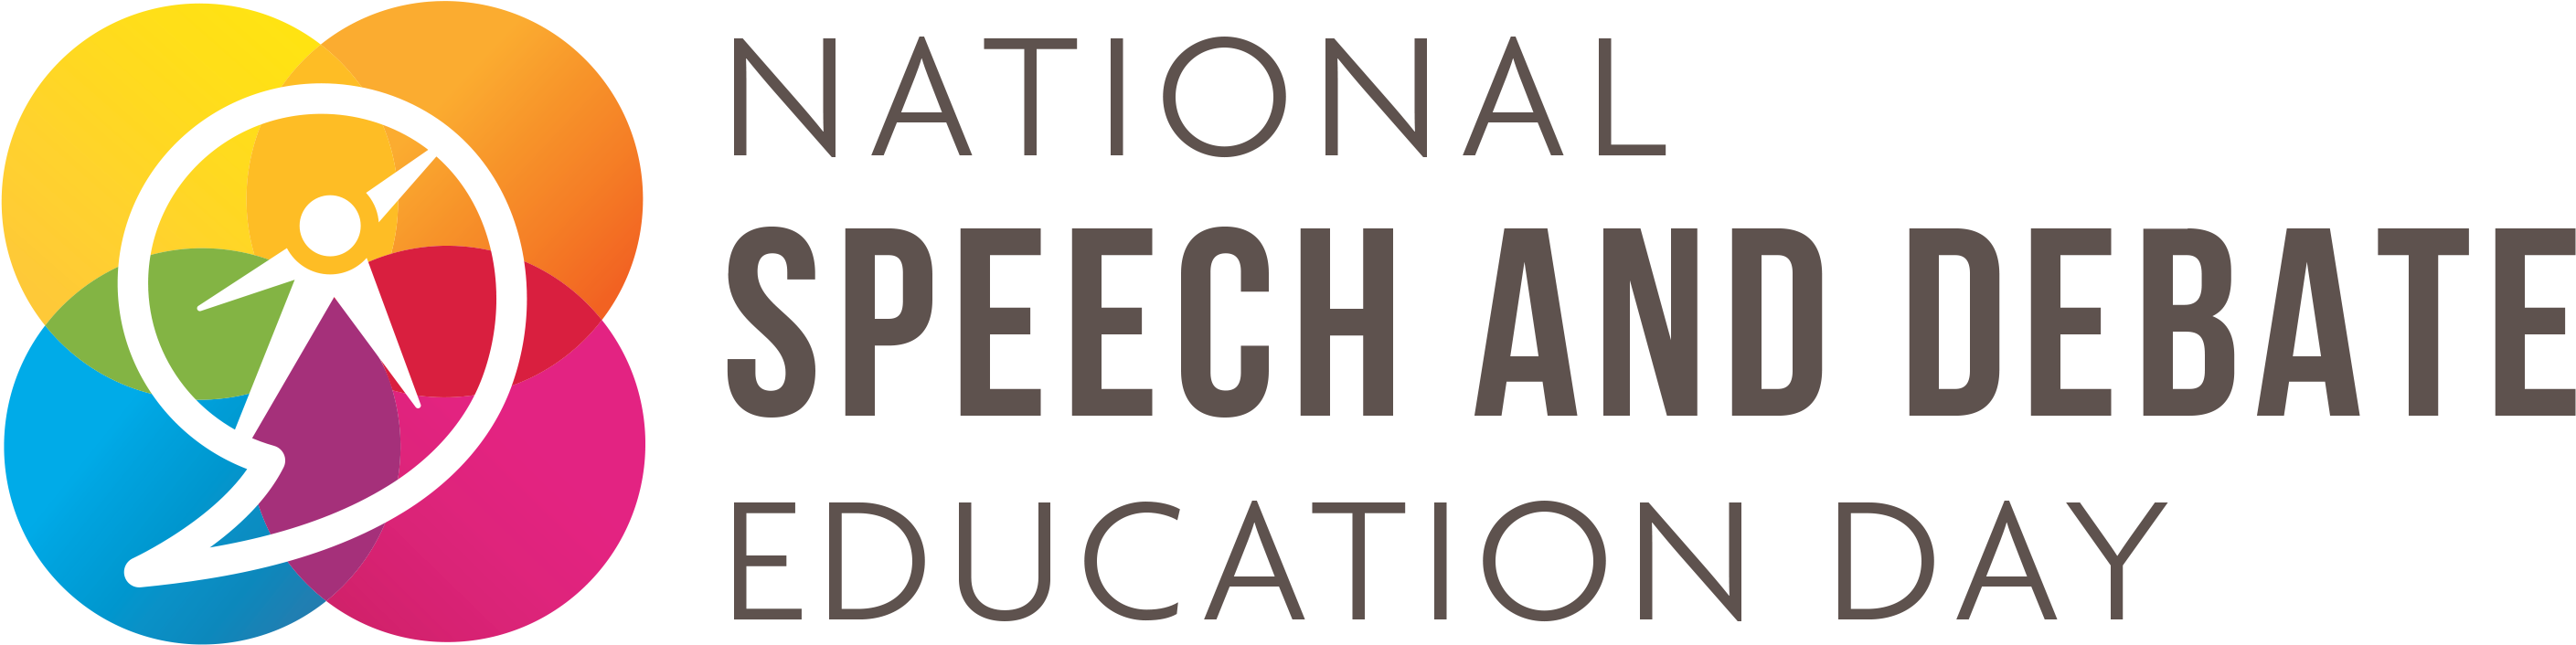 Horizontal Logo - National Speech And Debate Day (2869x753)